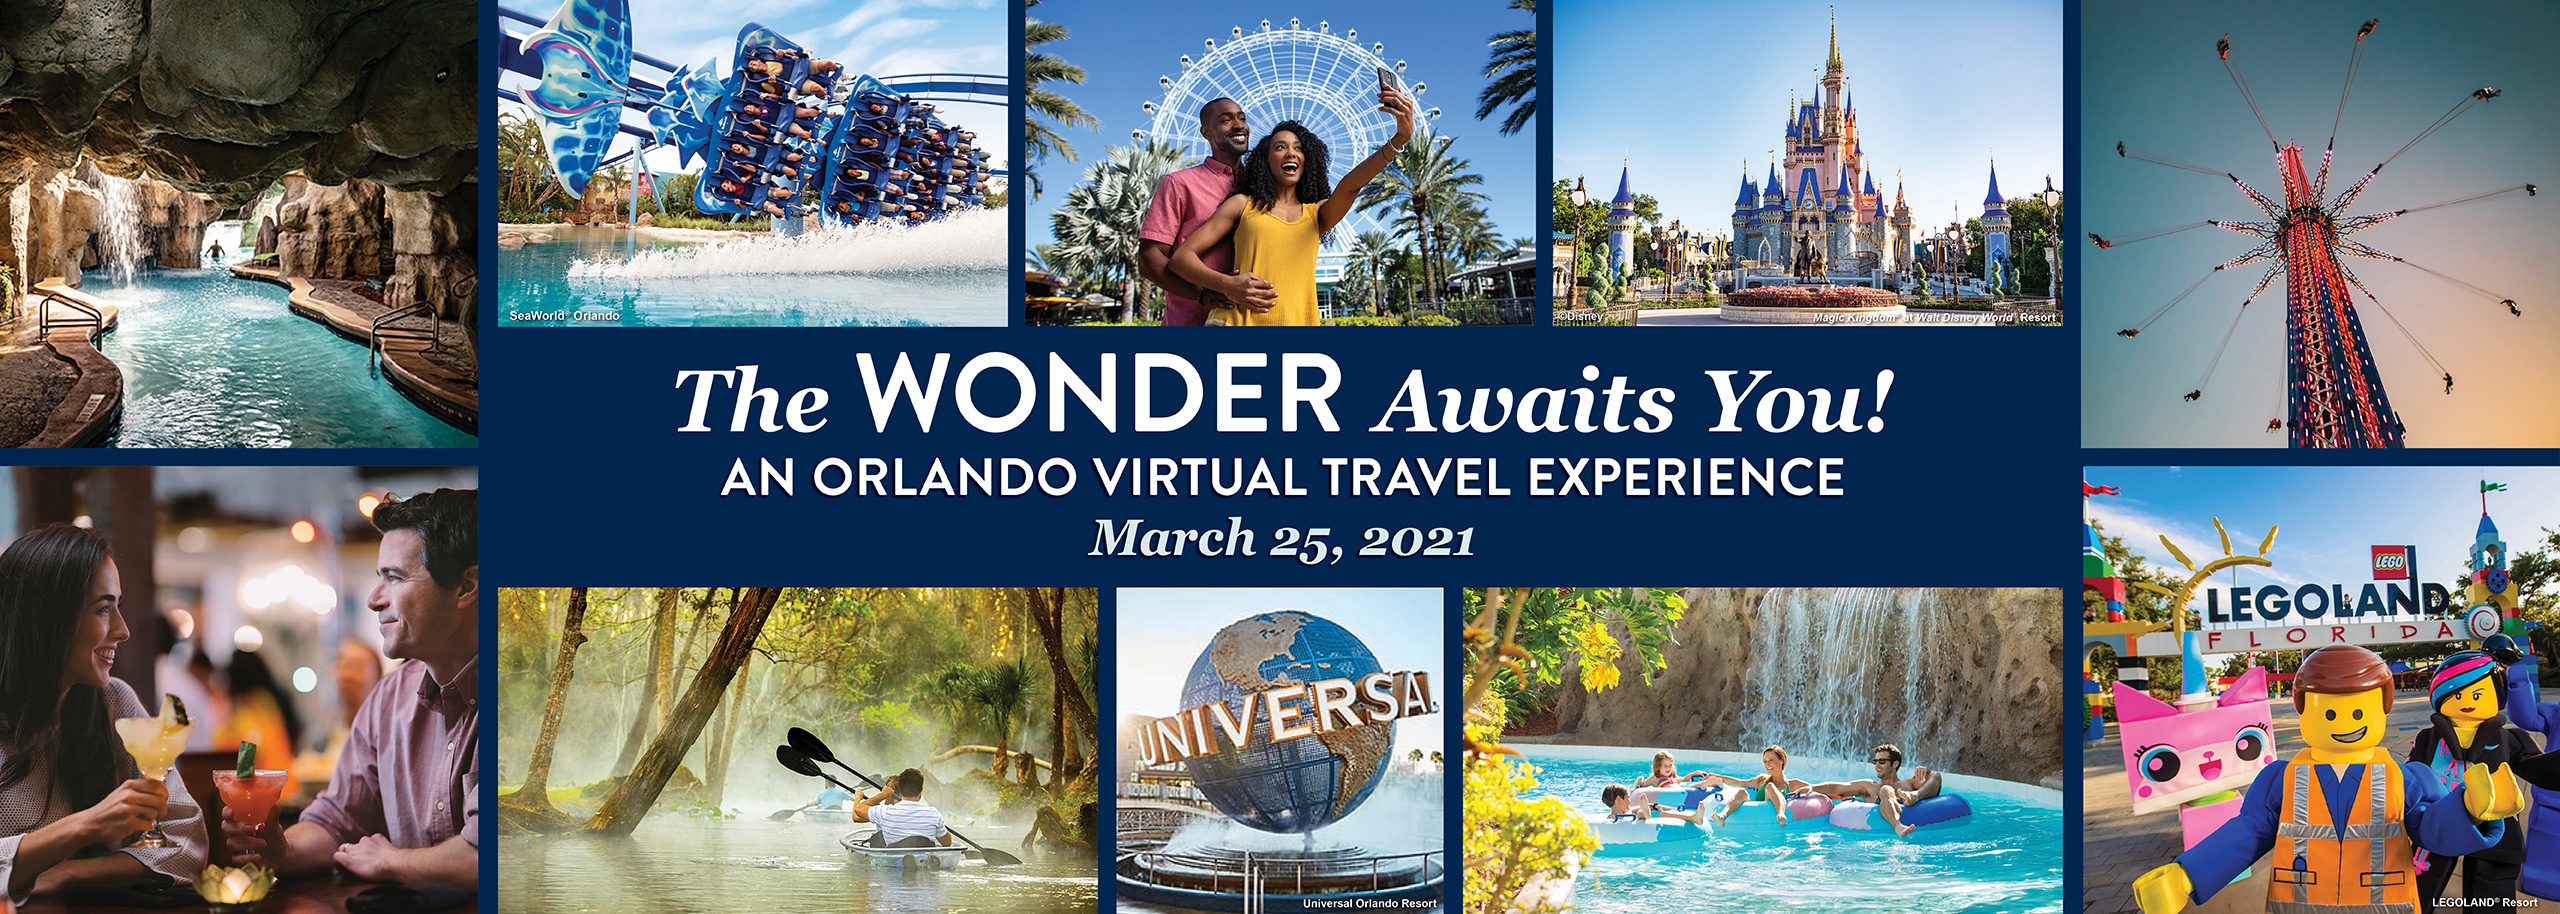 The Wonder Awaits You: An Orlando Virtual Travel Experience 